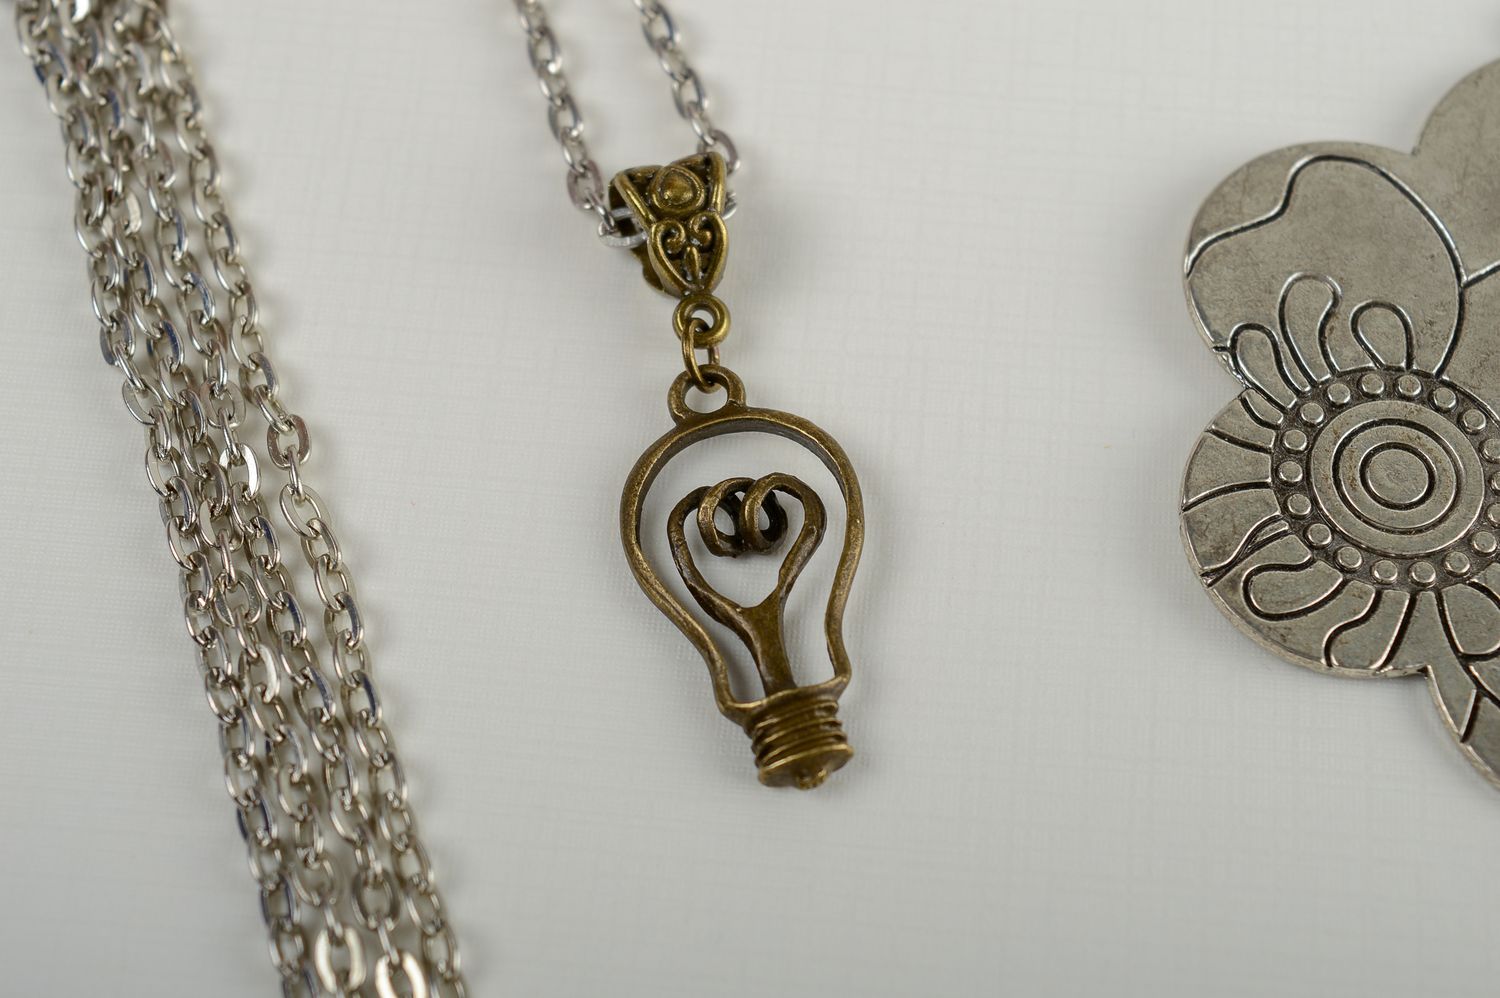 Stylish pendant handmade pendant on chain metal pendant metal jewelry for girls photo 1